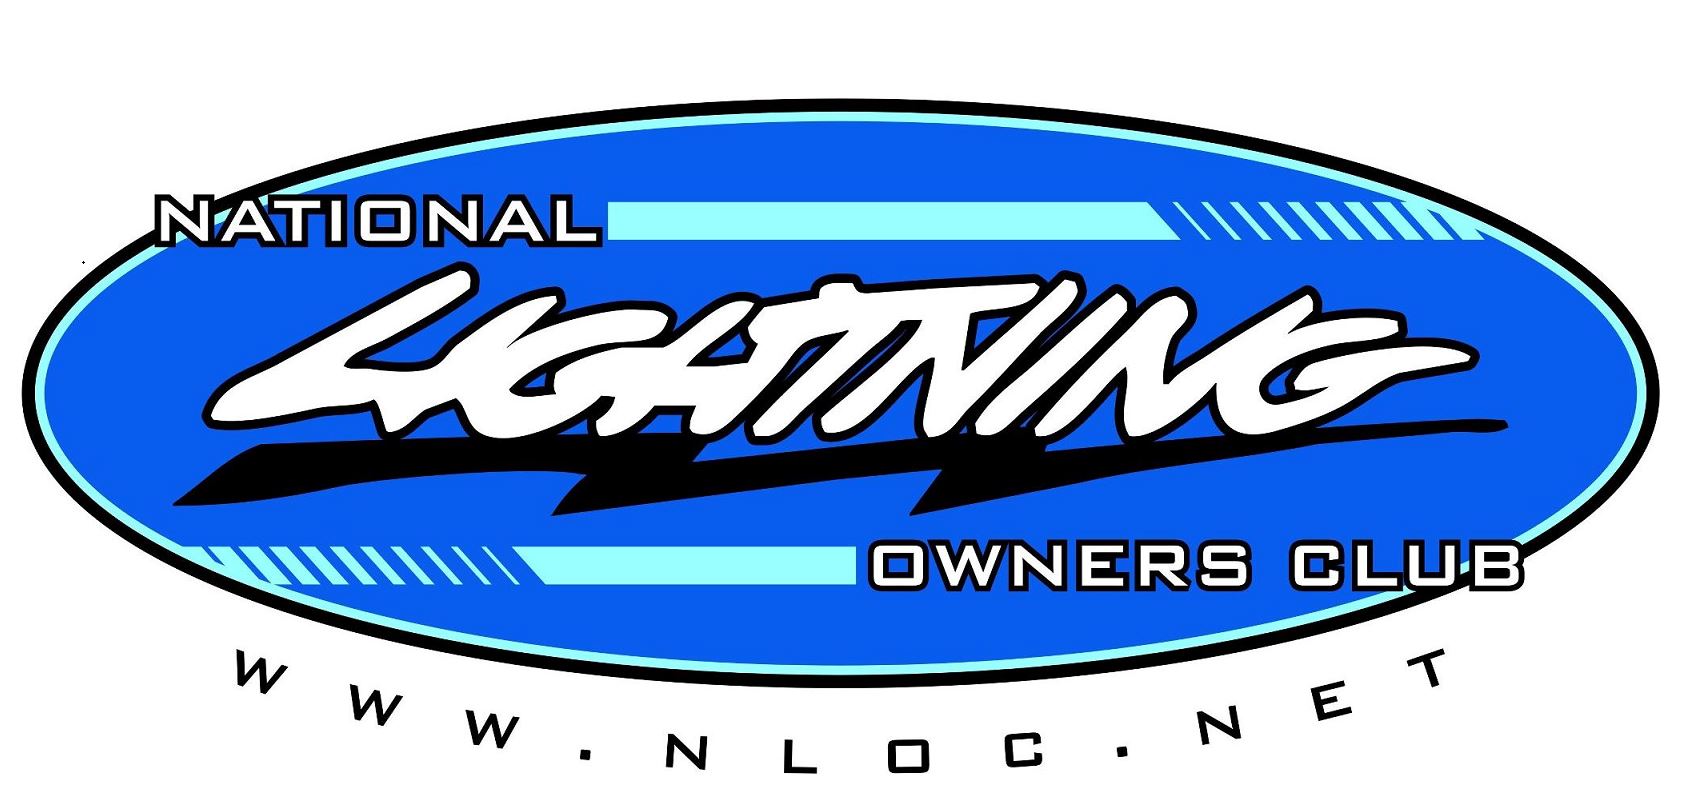 National Lightning Owner's Club